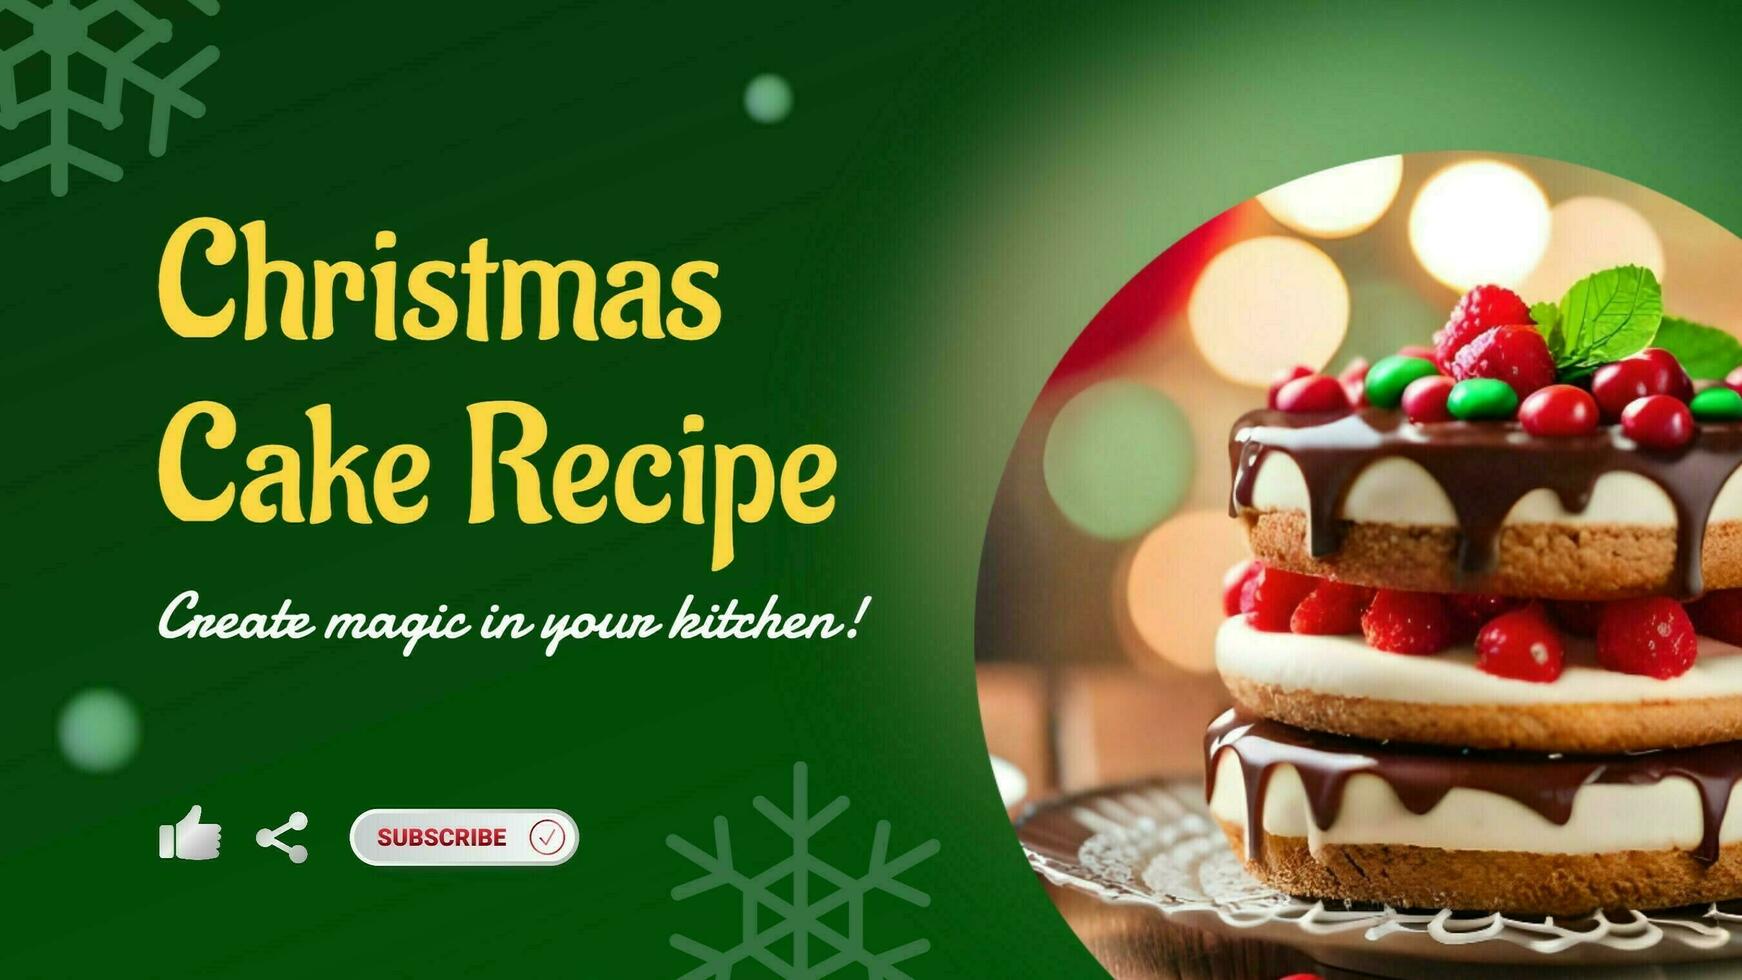 Green Christmas Cake Recipe Youtube Thumbnail template